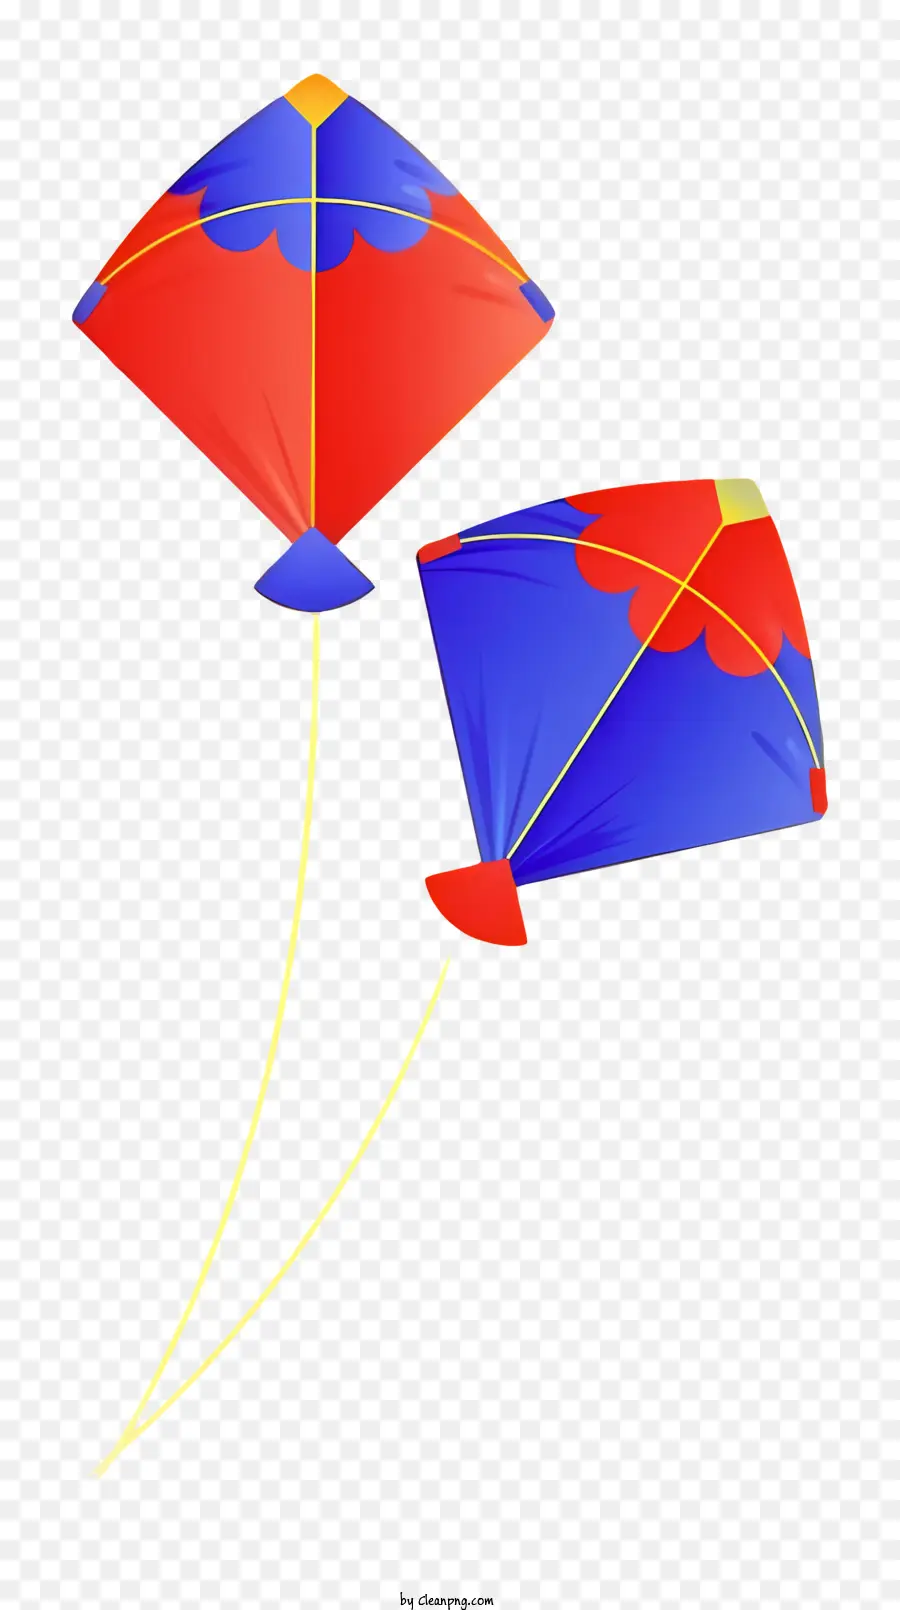 kites red and blue kites yellow string flying kites tied together kites